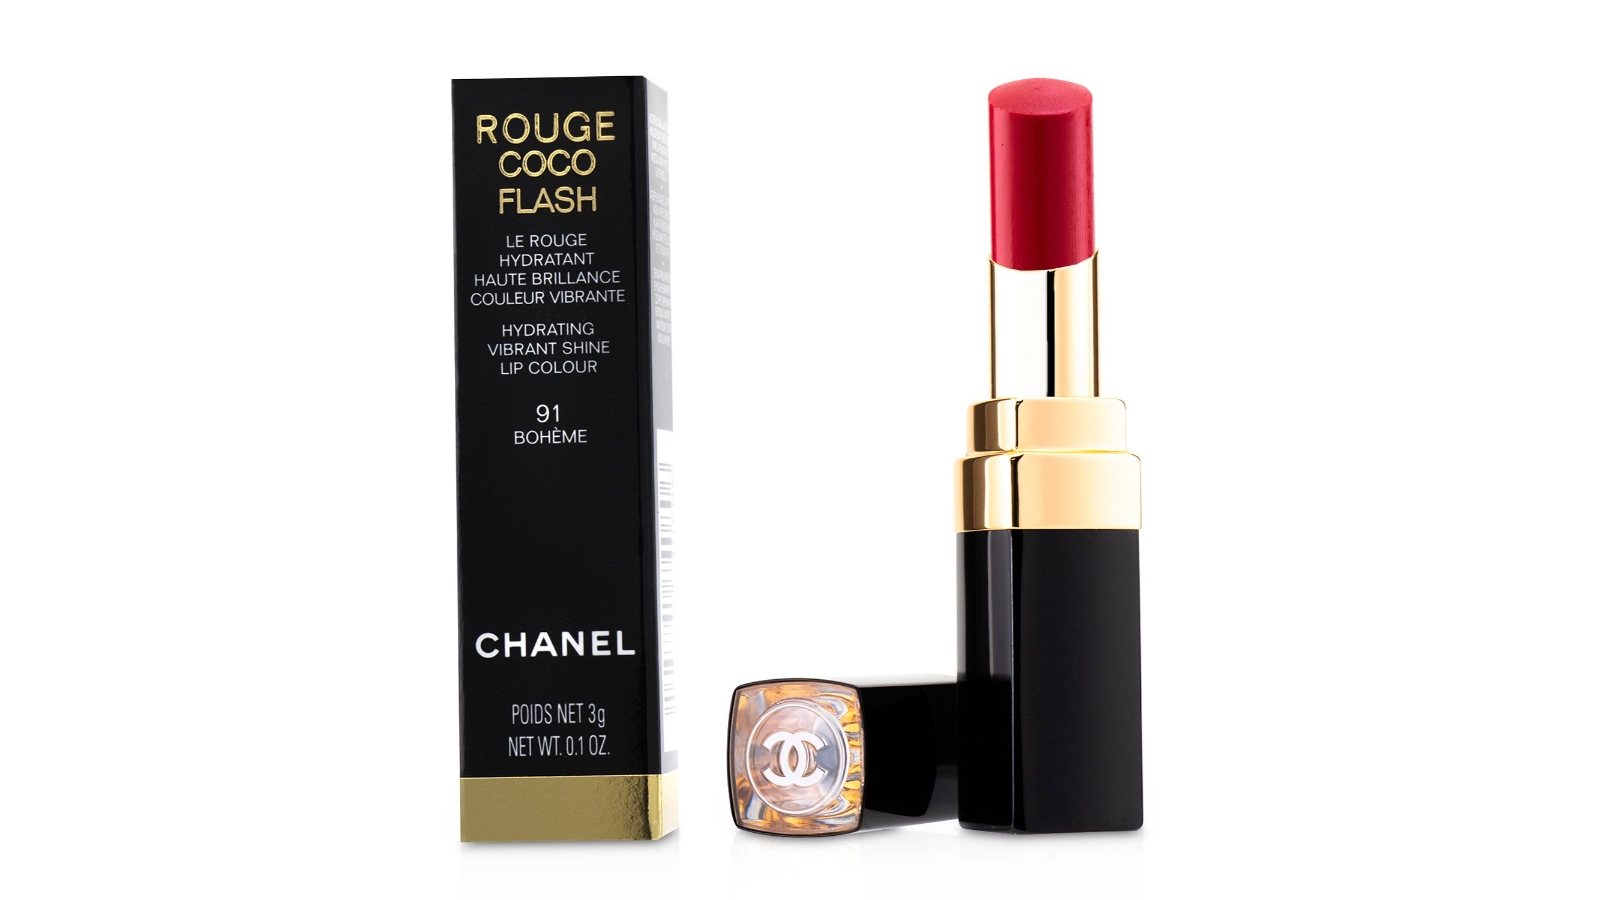 Chanel Hydra Beauty Nutrition Nourishing Lip Care 10g/0.35oz